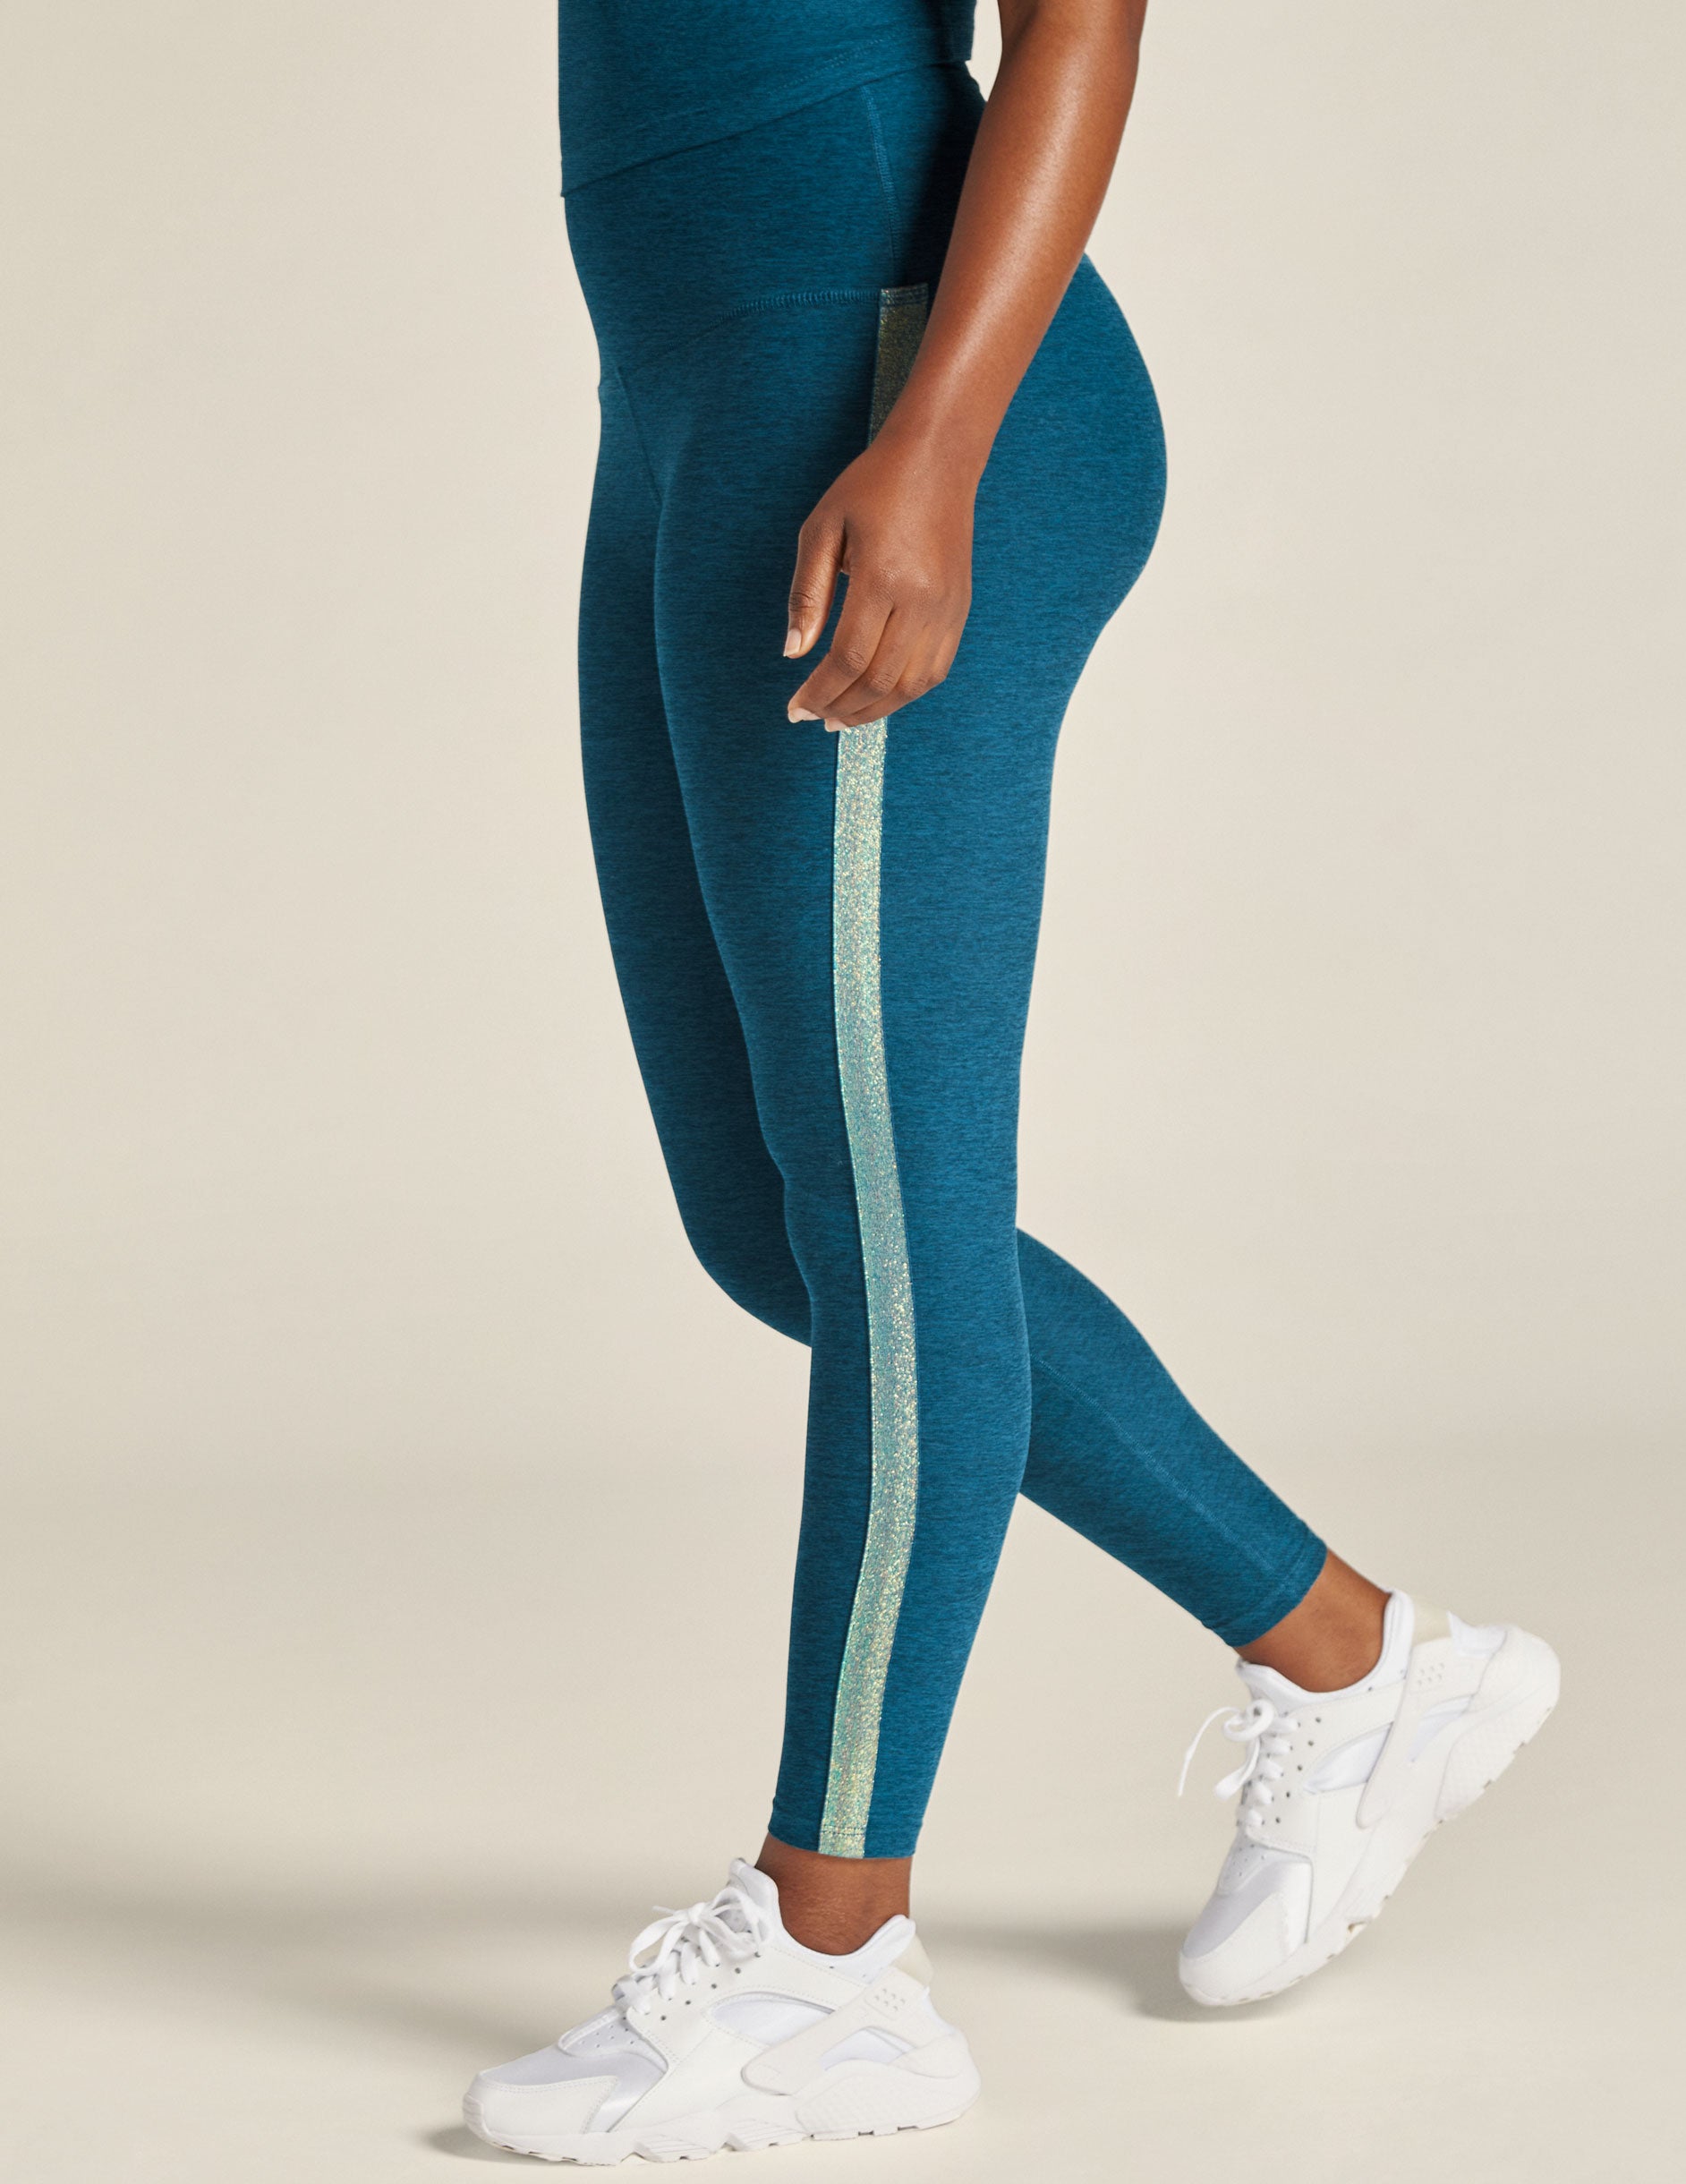 Wingate AG Turquoise Blue All-Over Print Plus Size Leggings Yoga